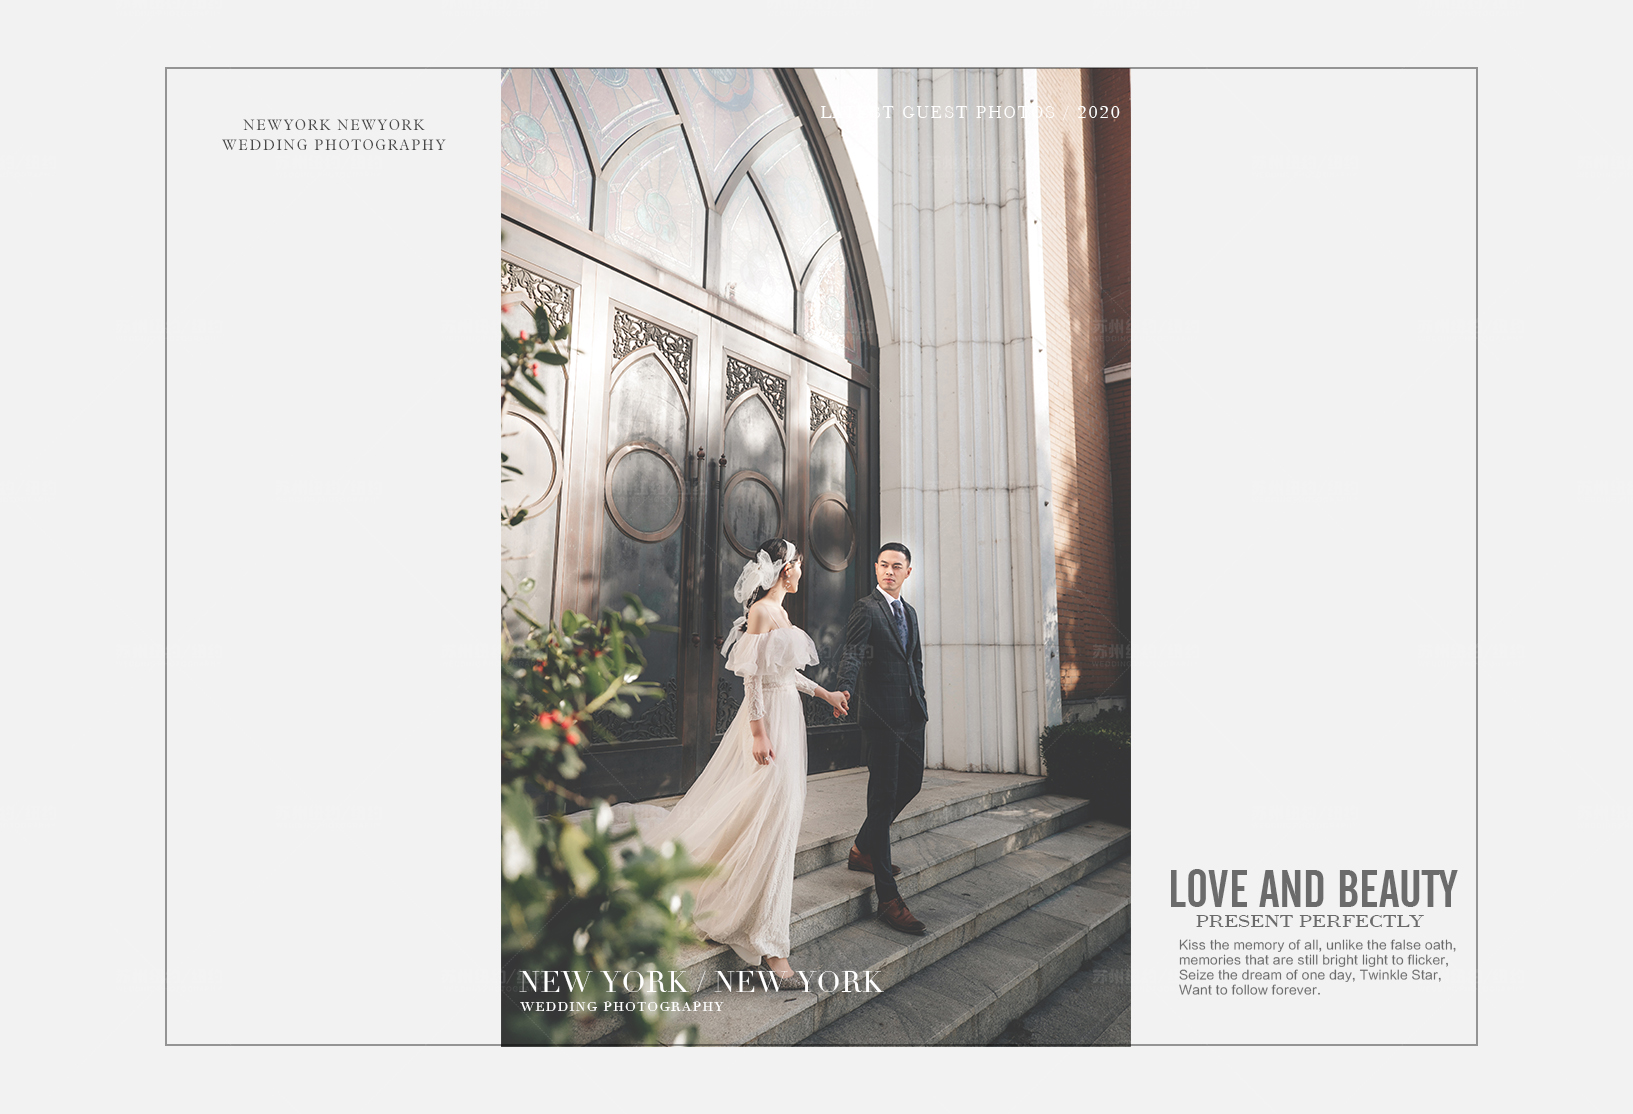 Mr.许 & Ms.高（纽约纽约最新客照）婚纱摄影照